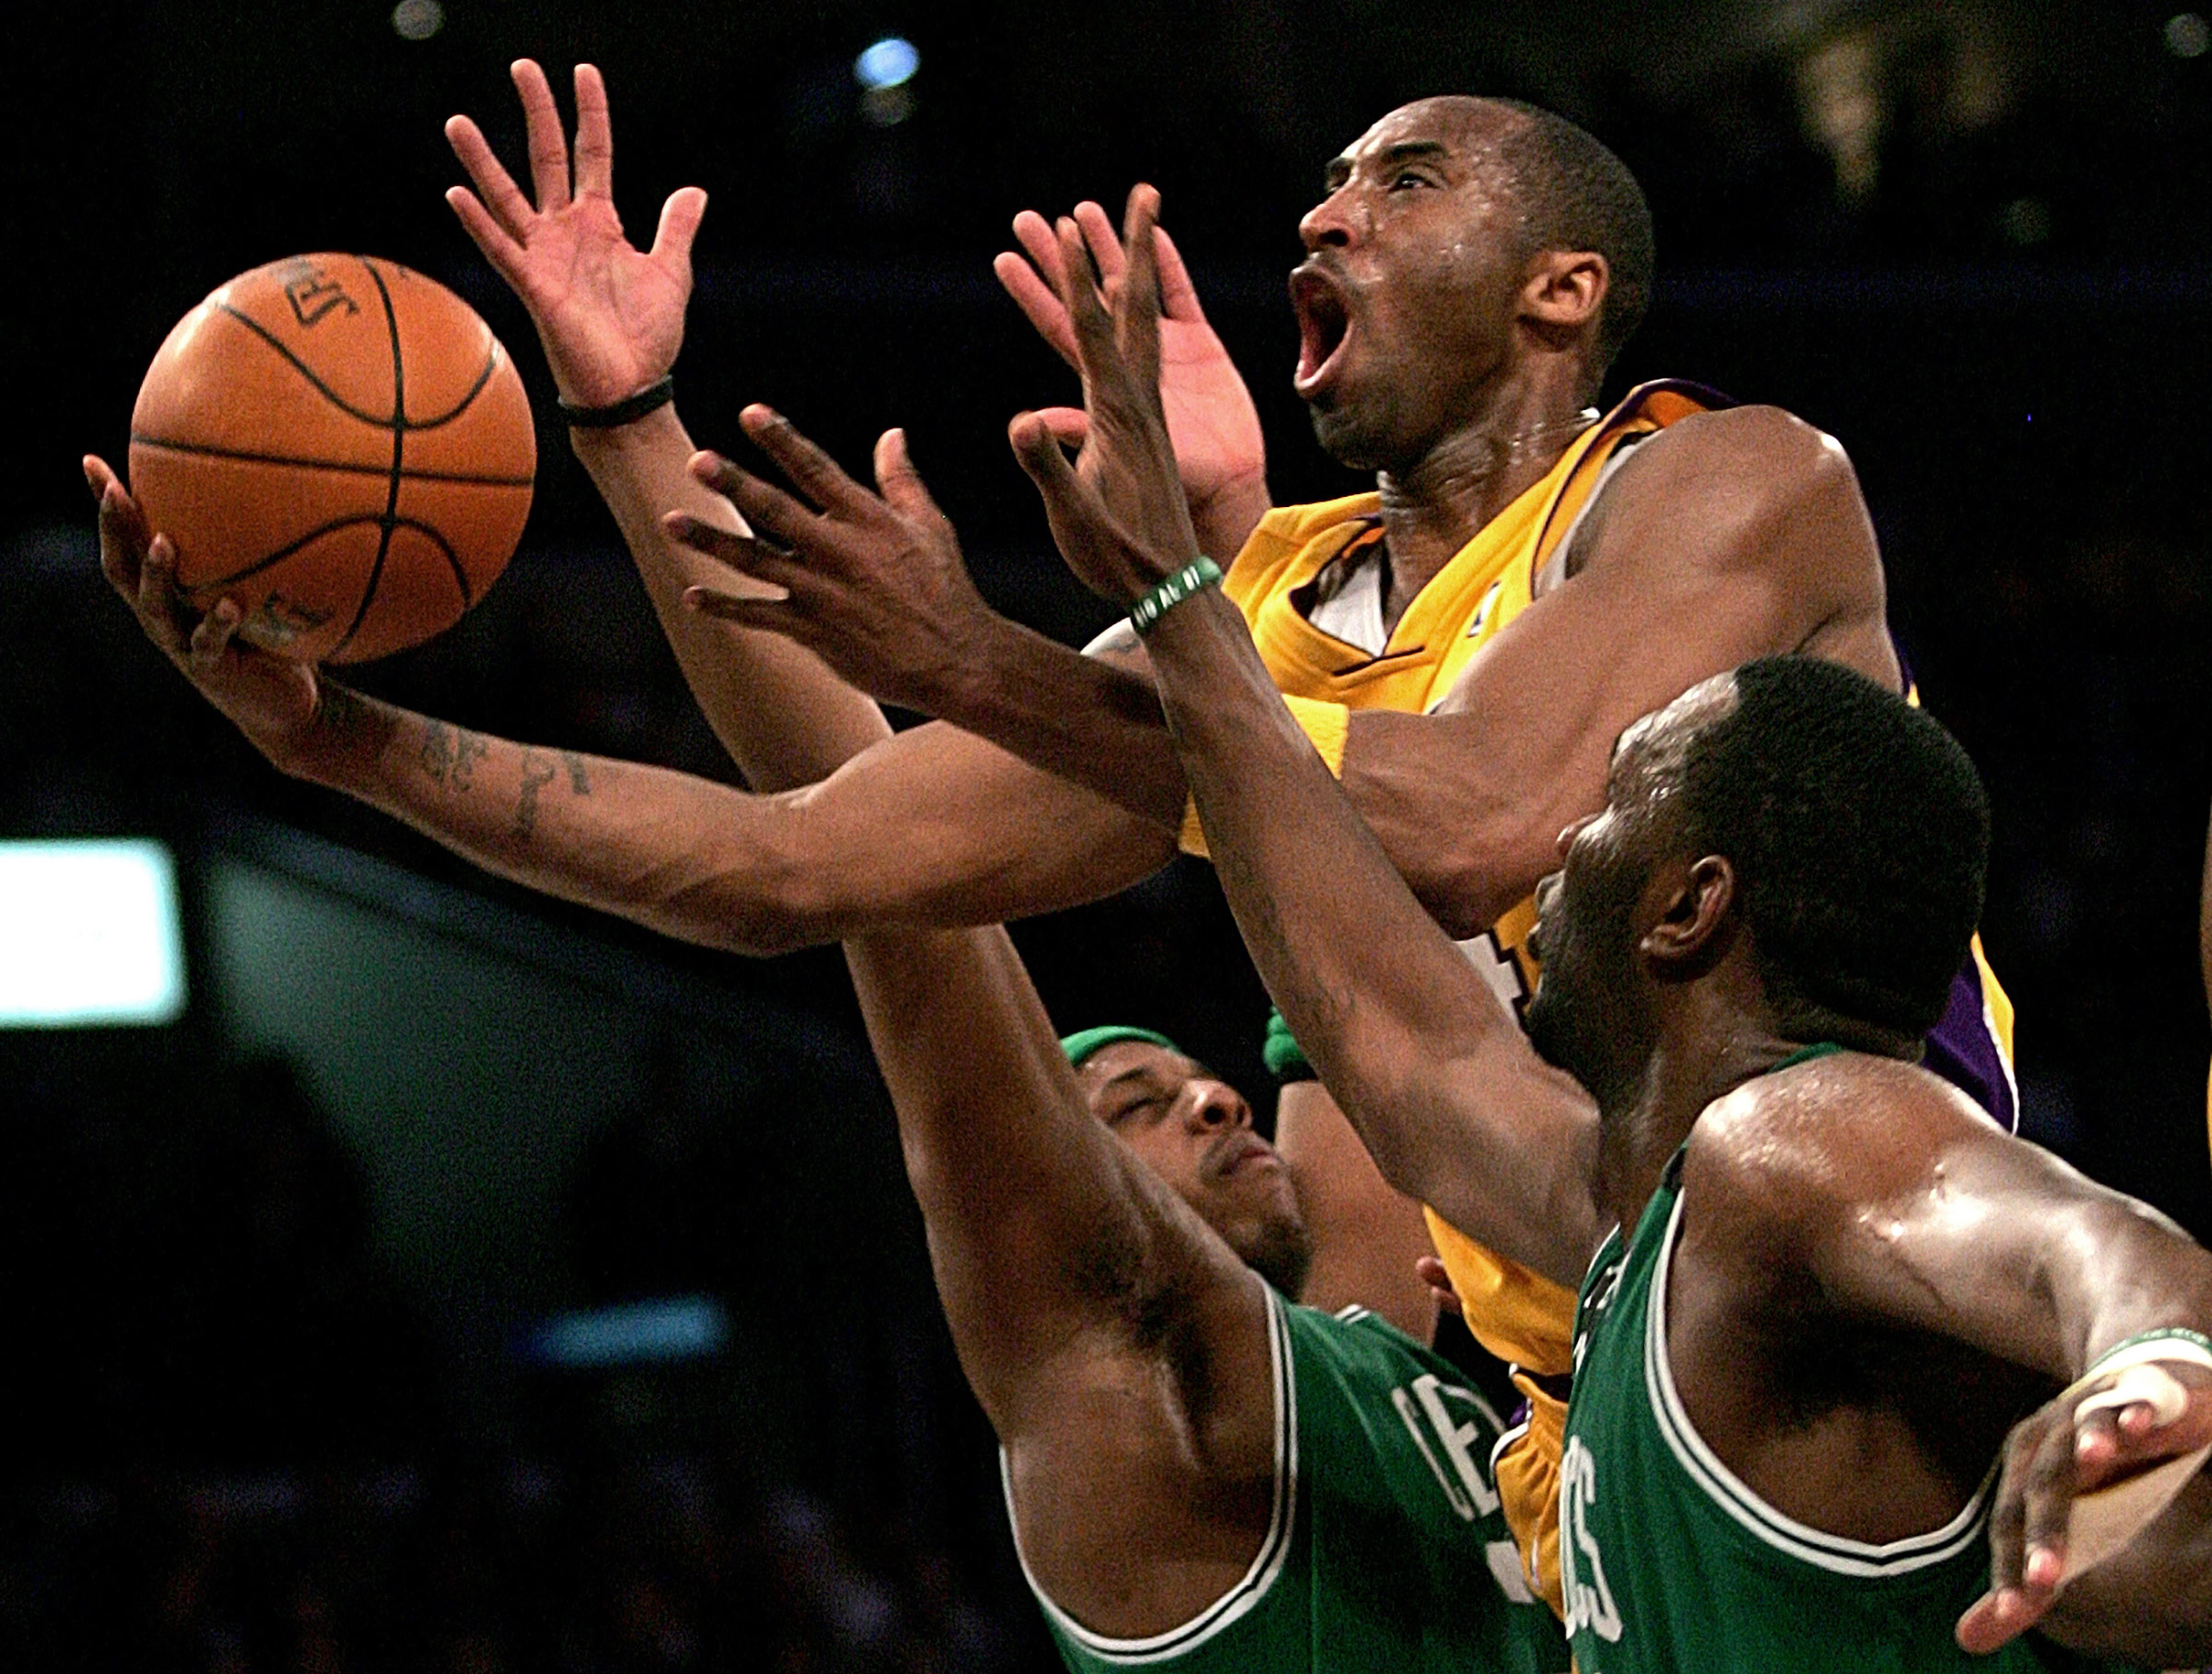 Kobe Bryant goes up for a shot between the Boston Celtics' Paul Pierce and Al Jefferson